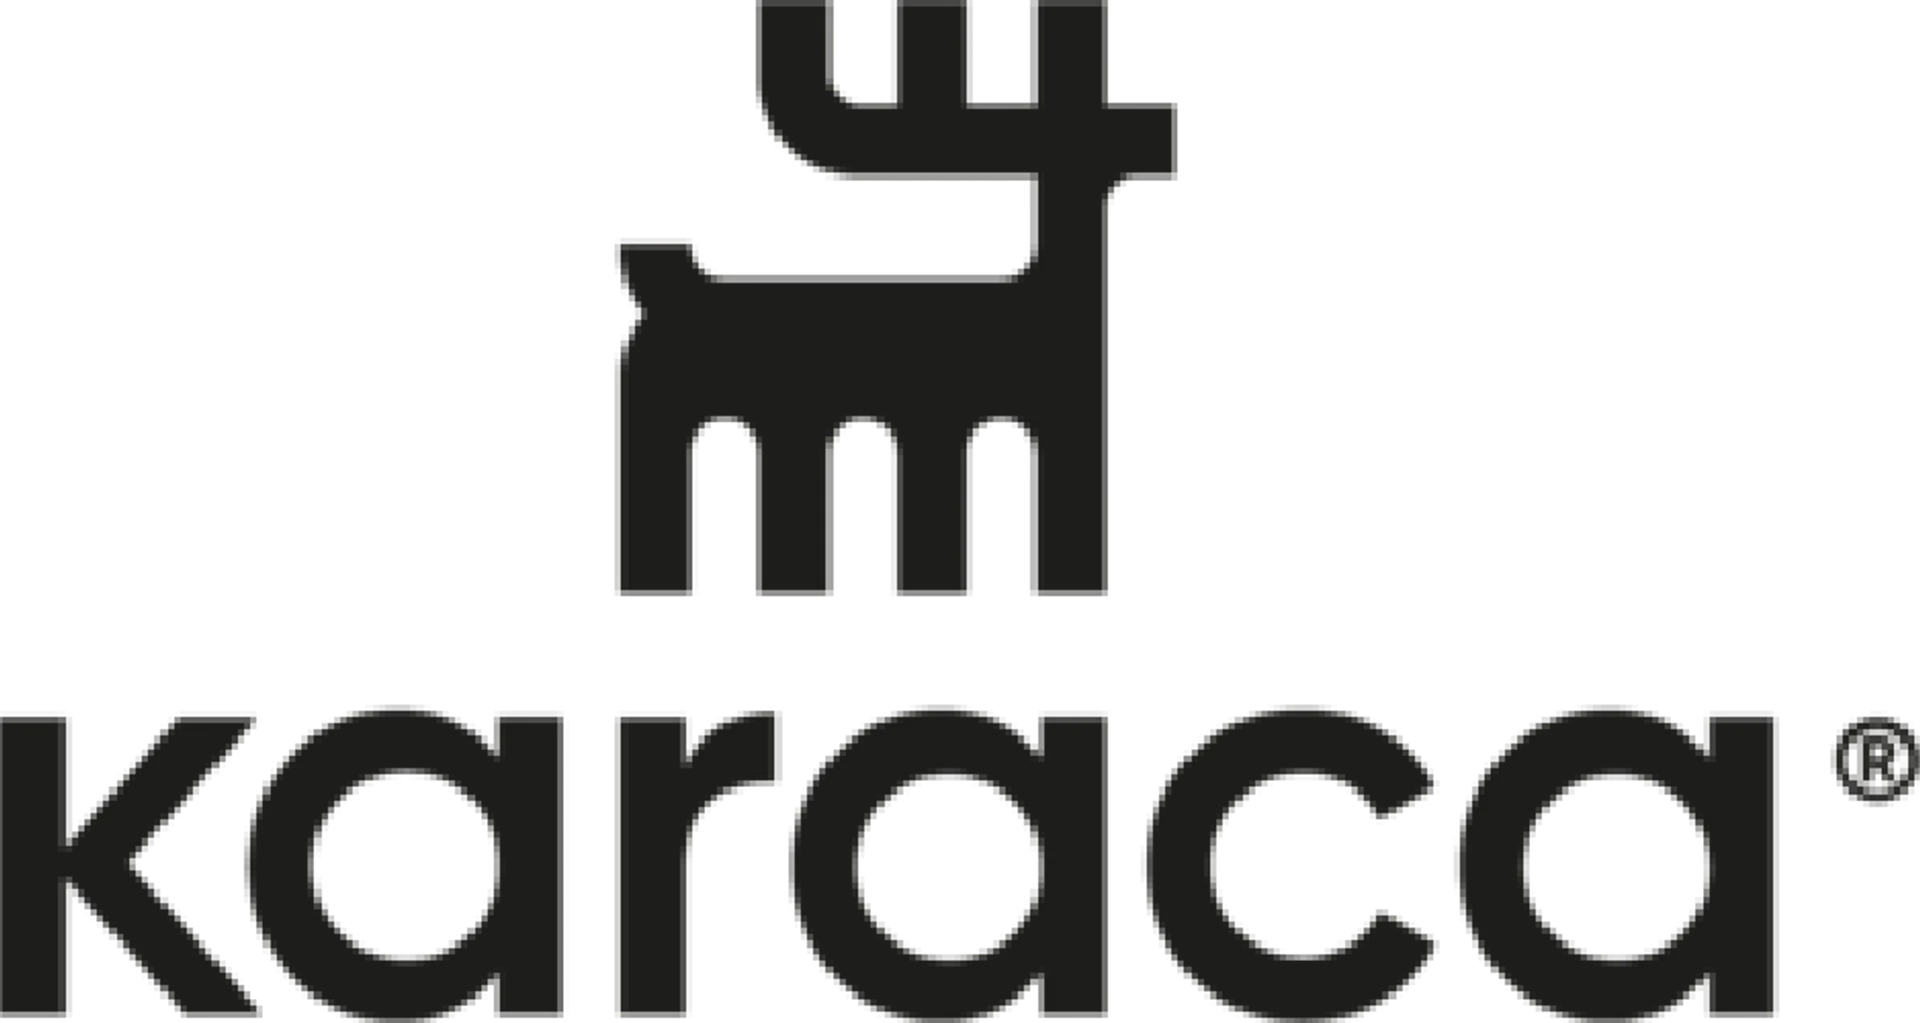 KARACA logo